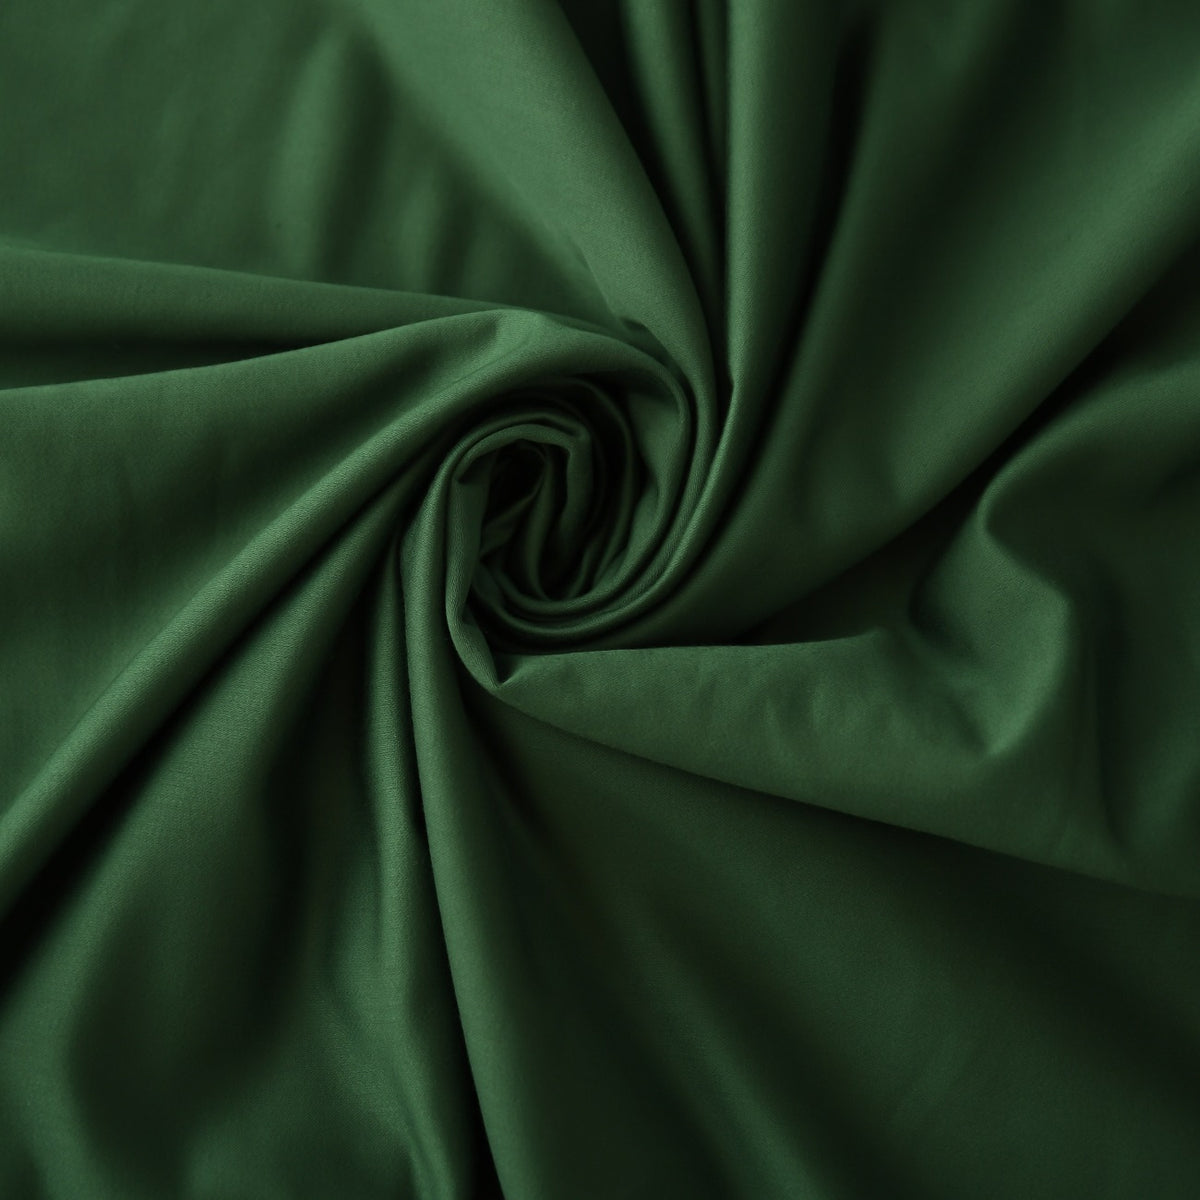 Night curtain dark green soft